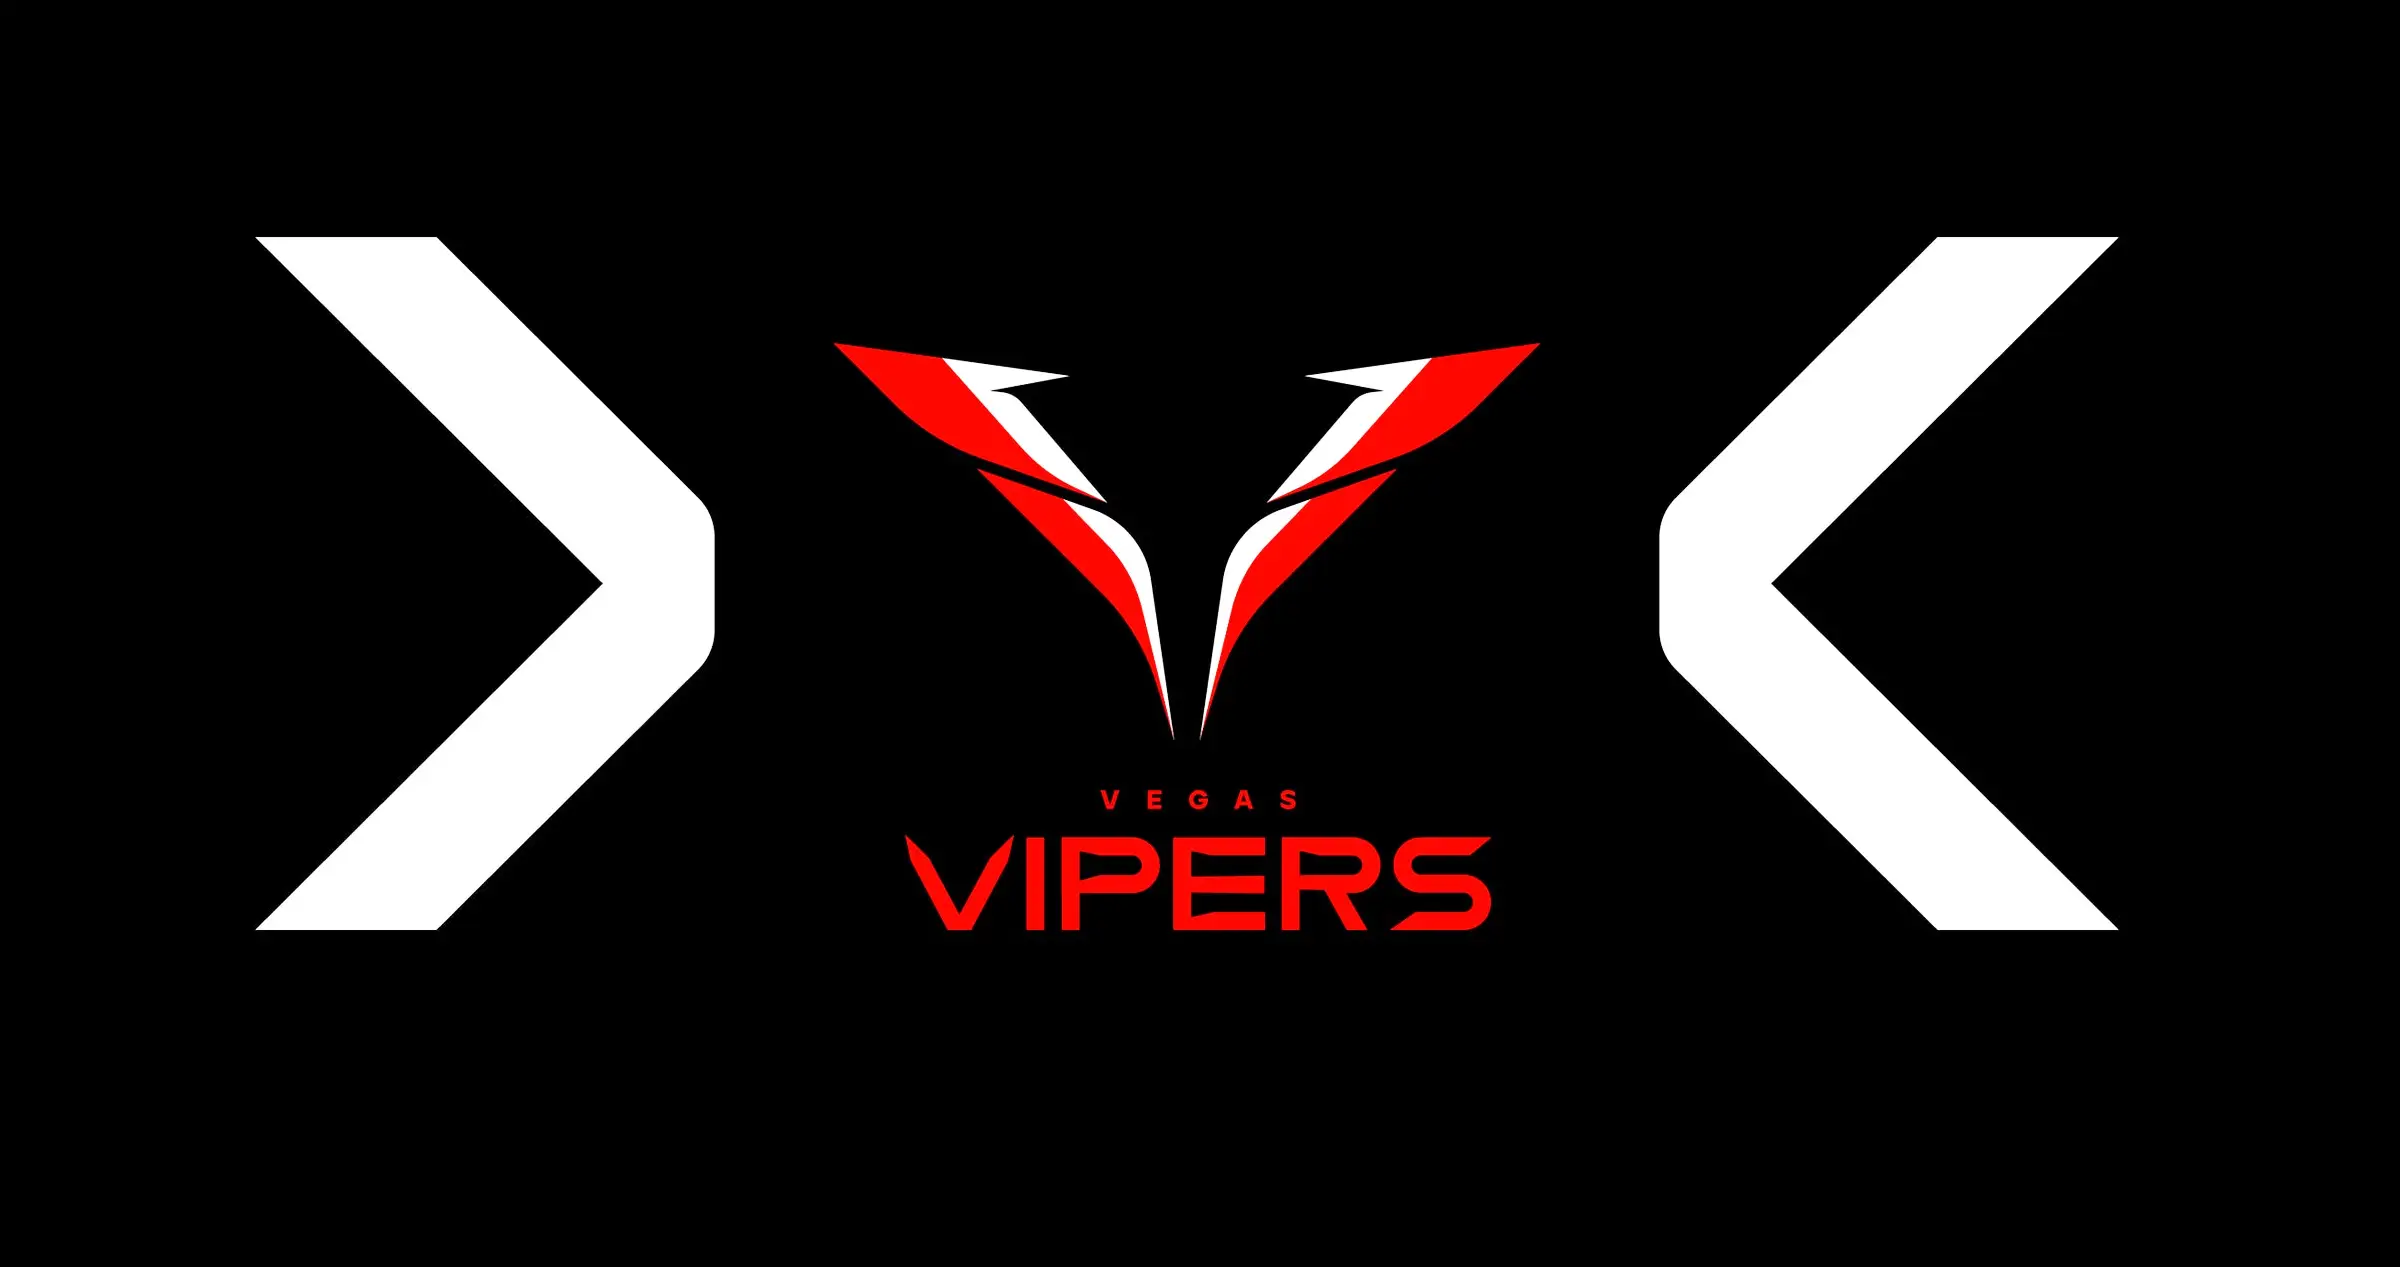 Vegas Vipers vs Arlington Renegades XFL